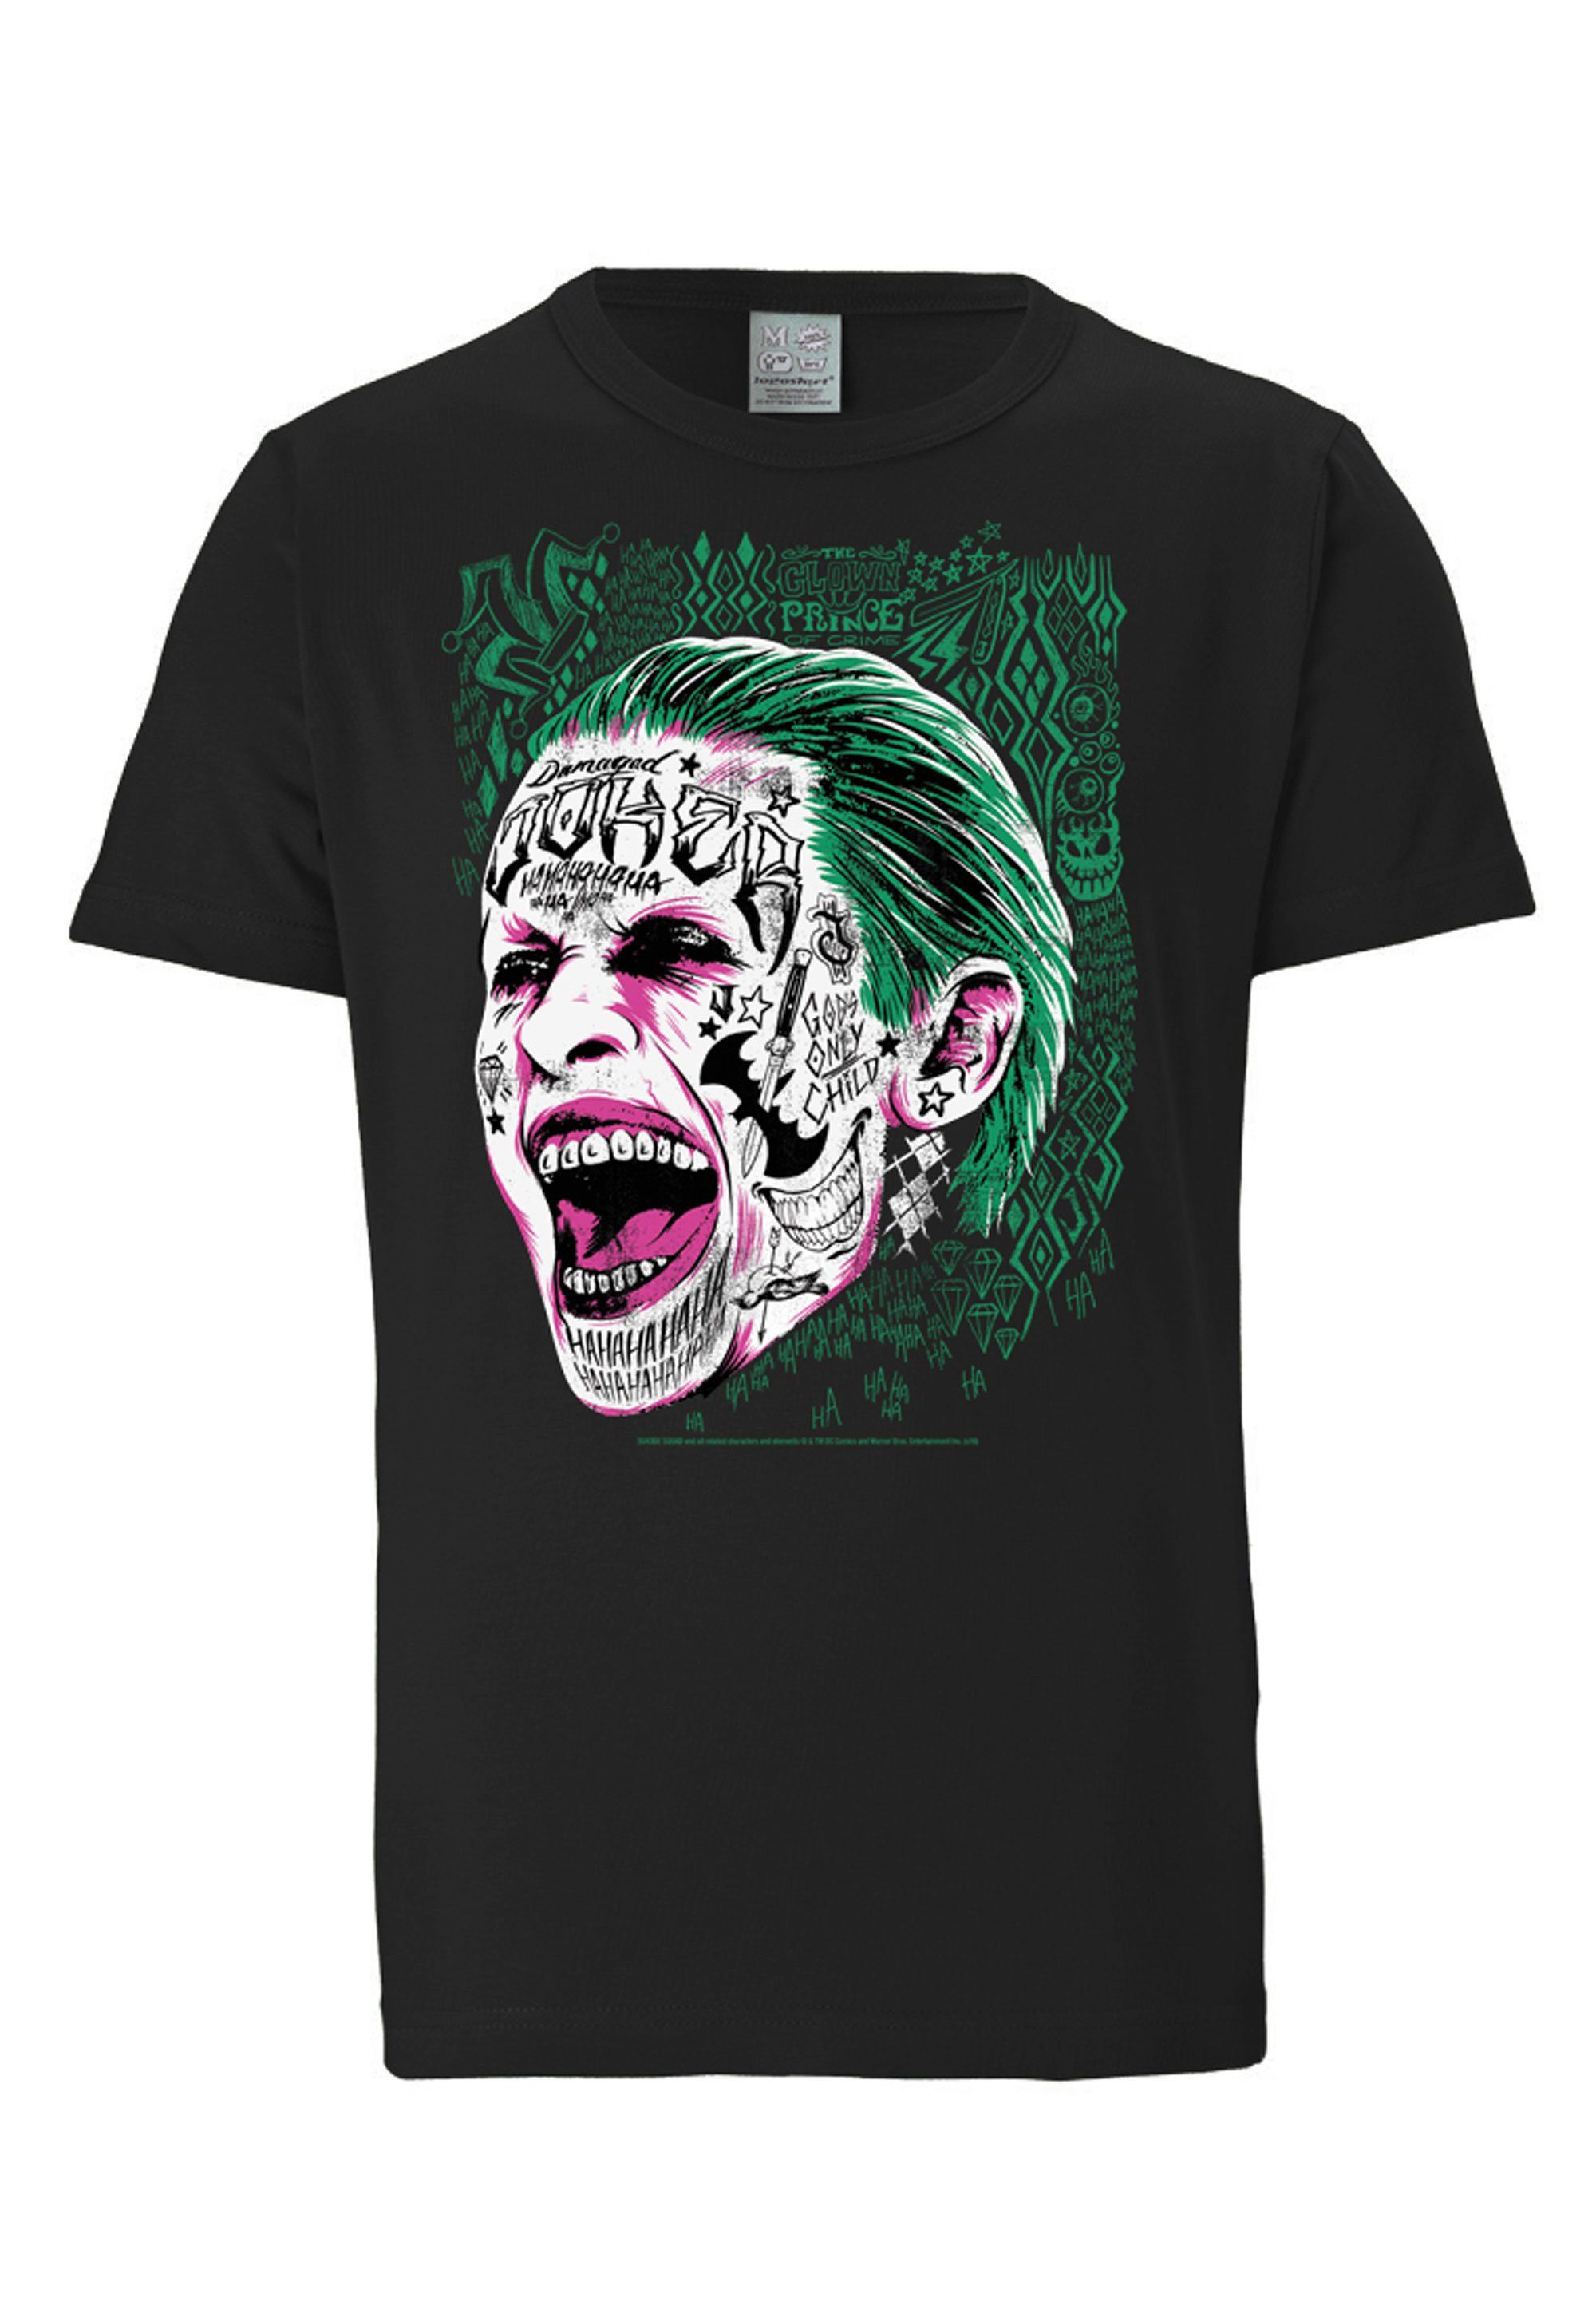 Joker LOGOSHIRT - lizenziertem T-Shirt mit Squad Print Suicide